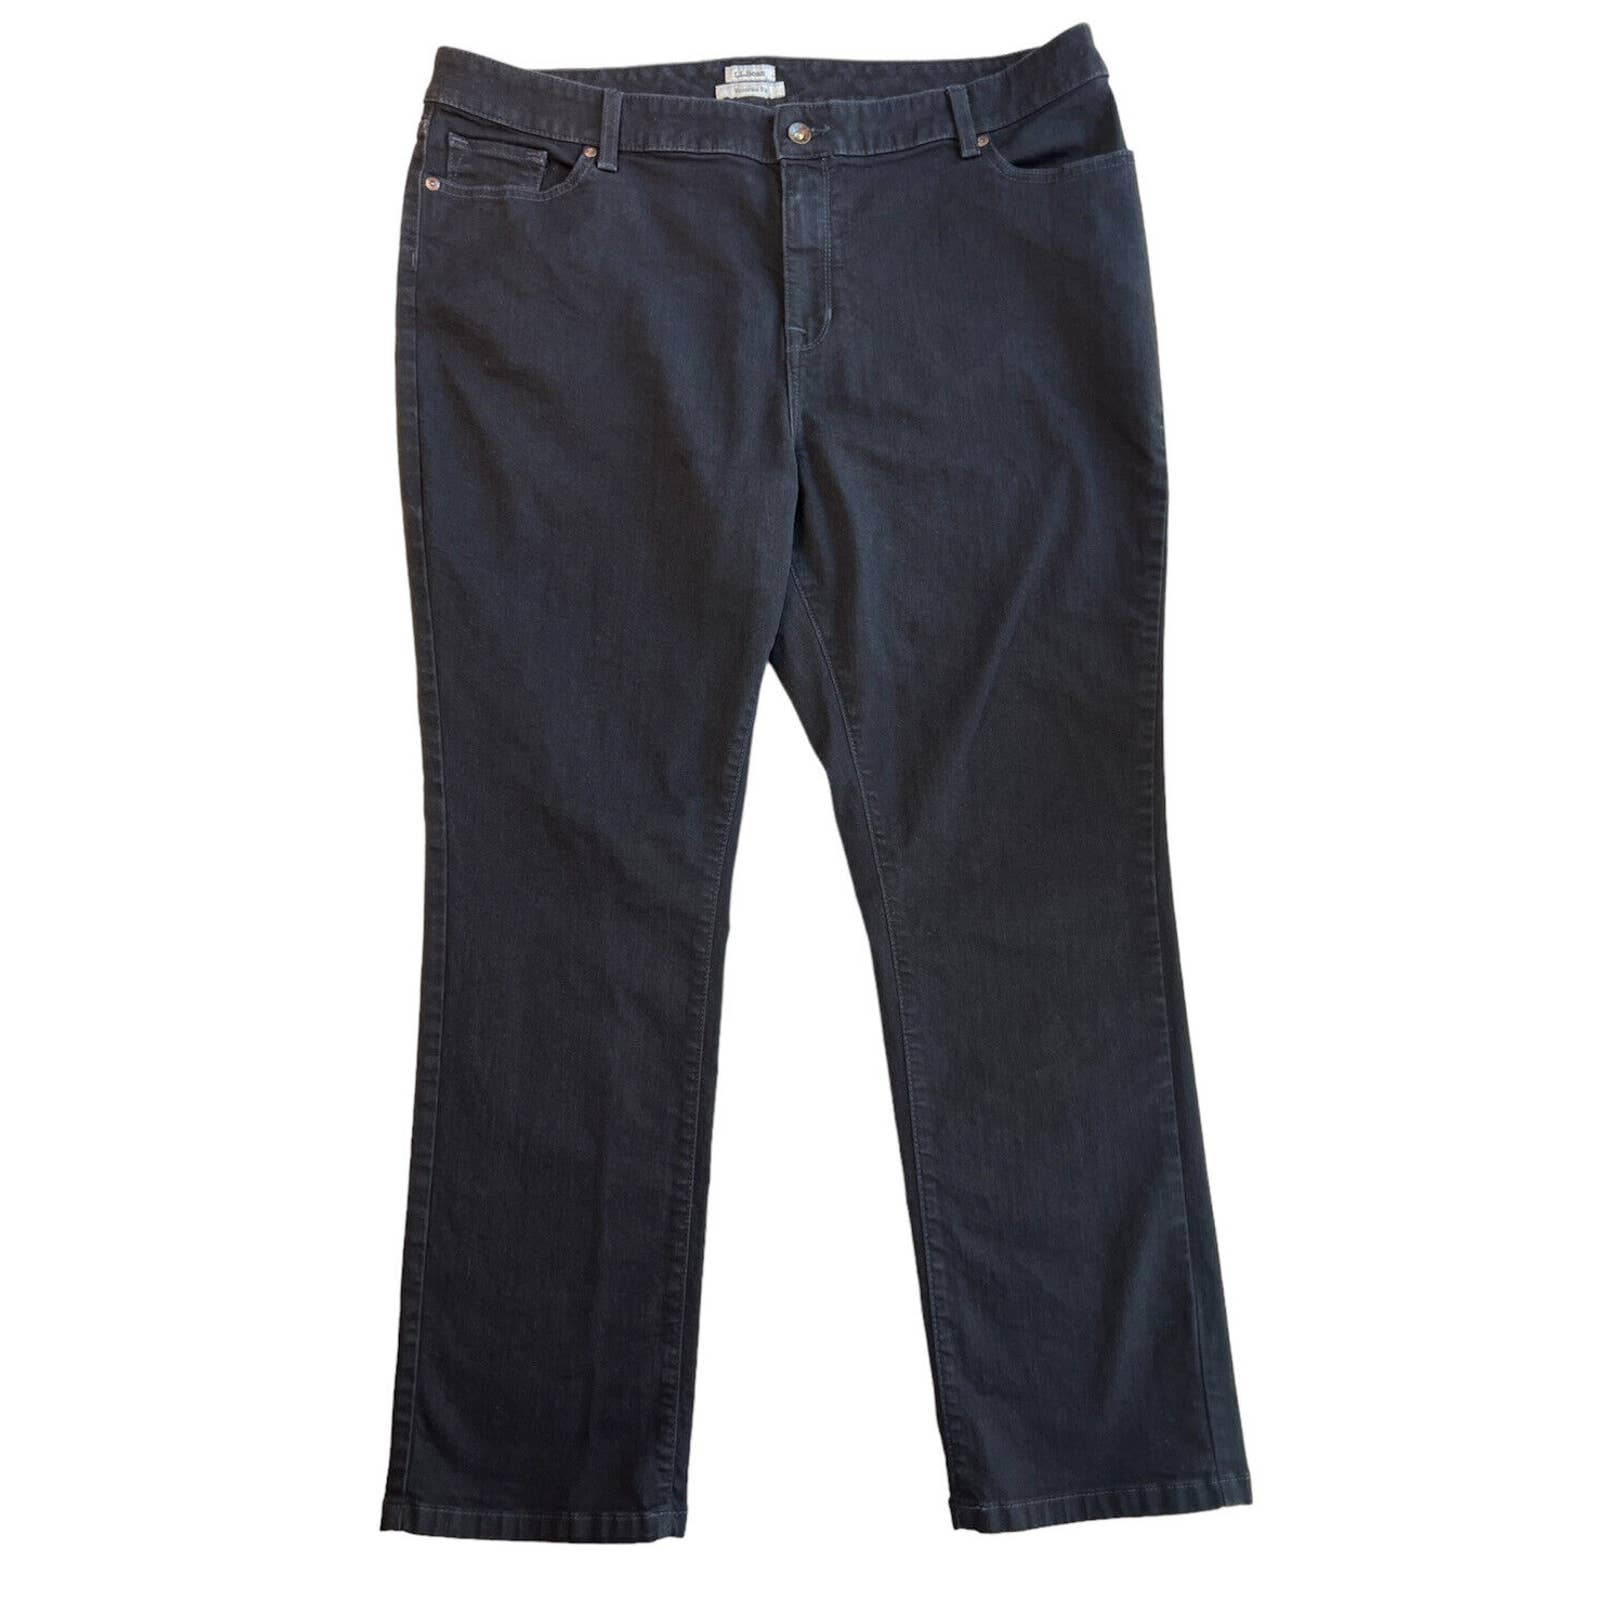 L.L. Bean Favorite Fit Jeans Womens Size 20 Reg Straight Leg Black 29.5” Inseam